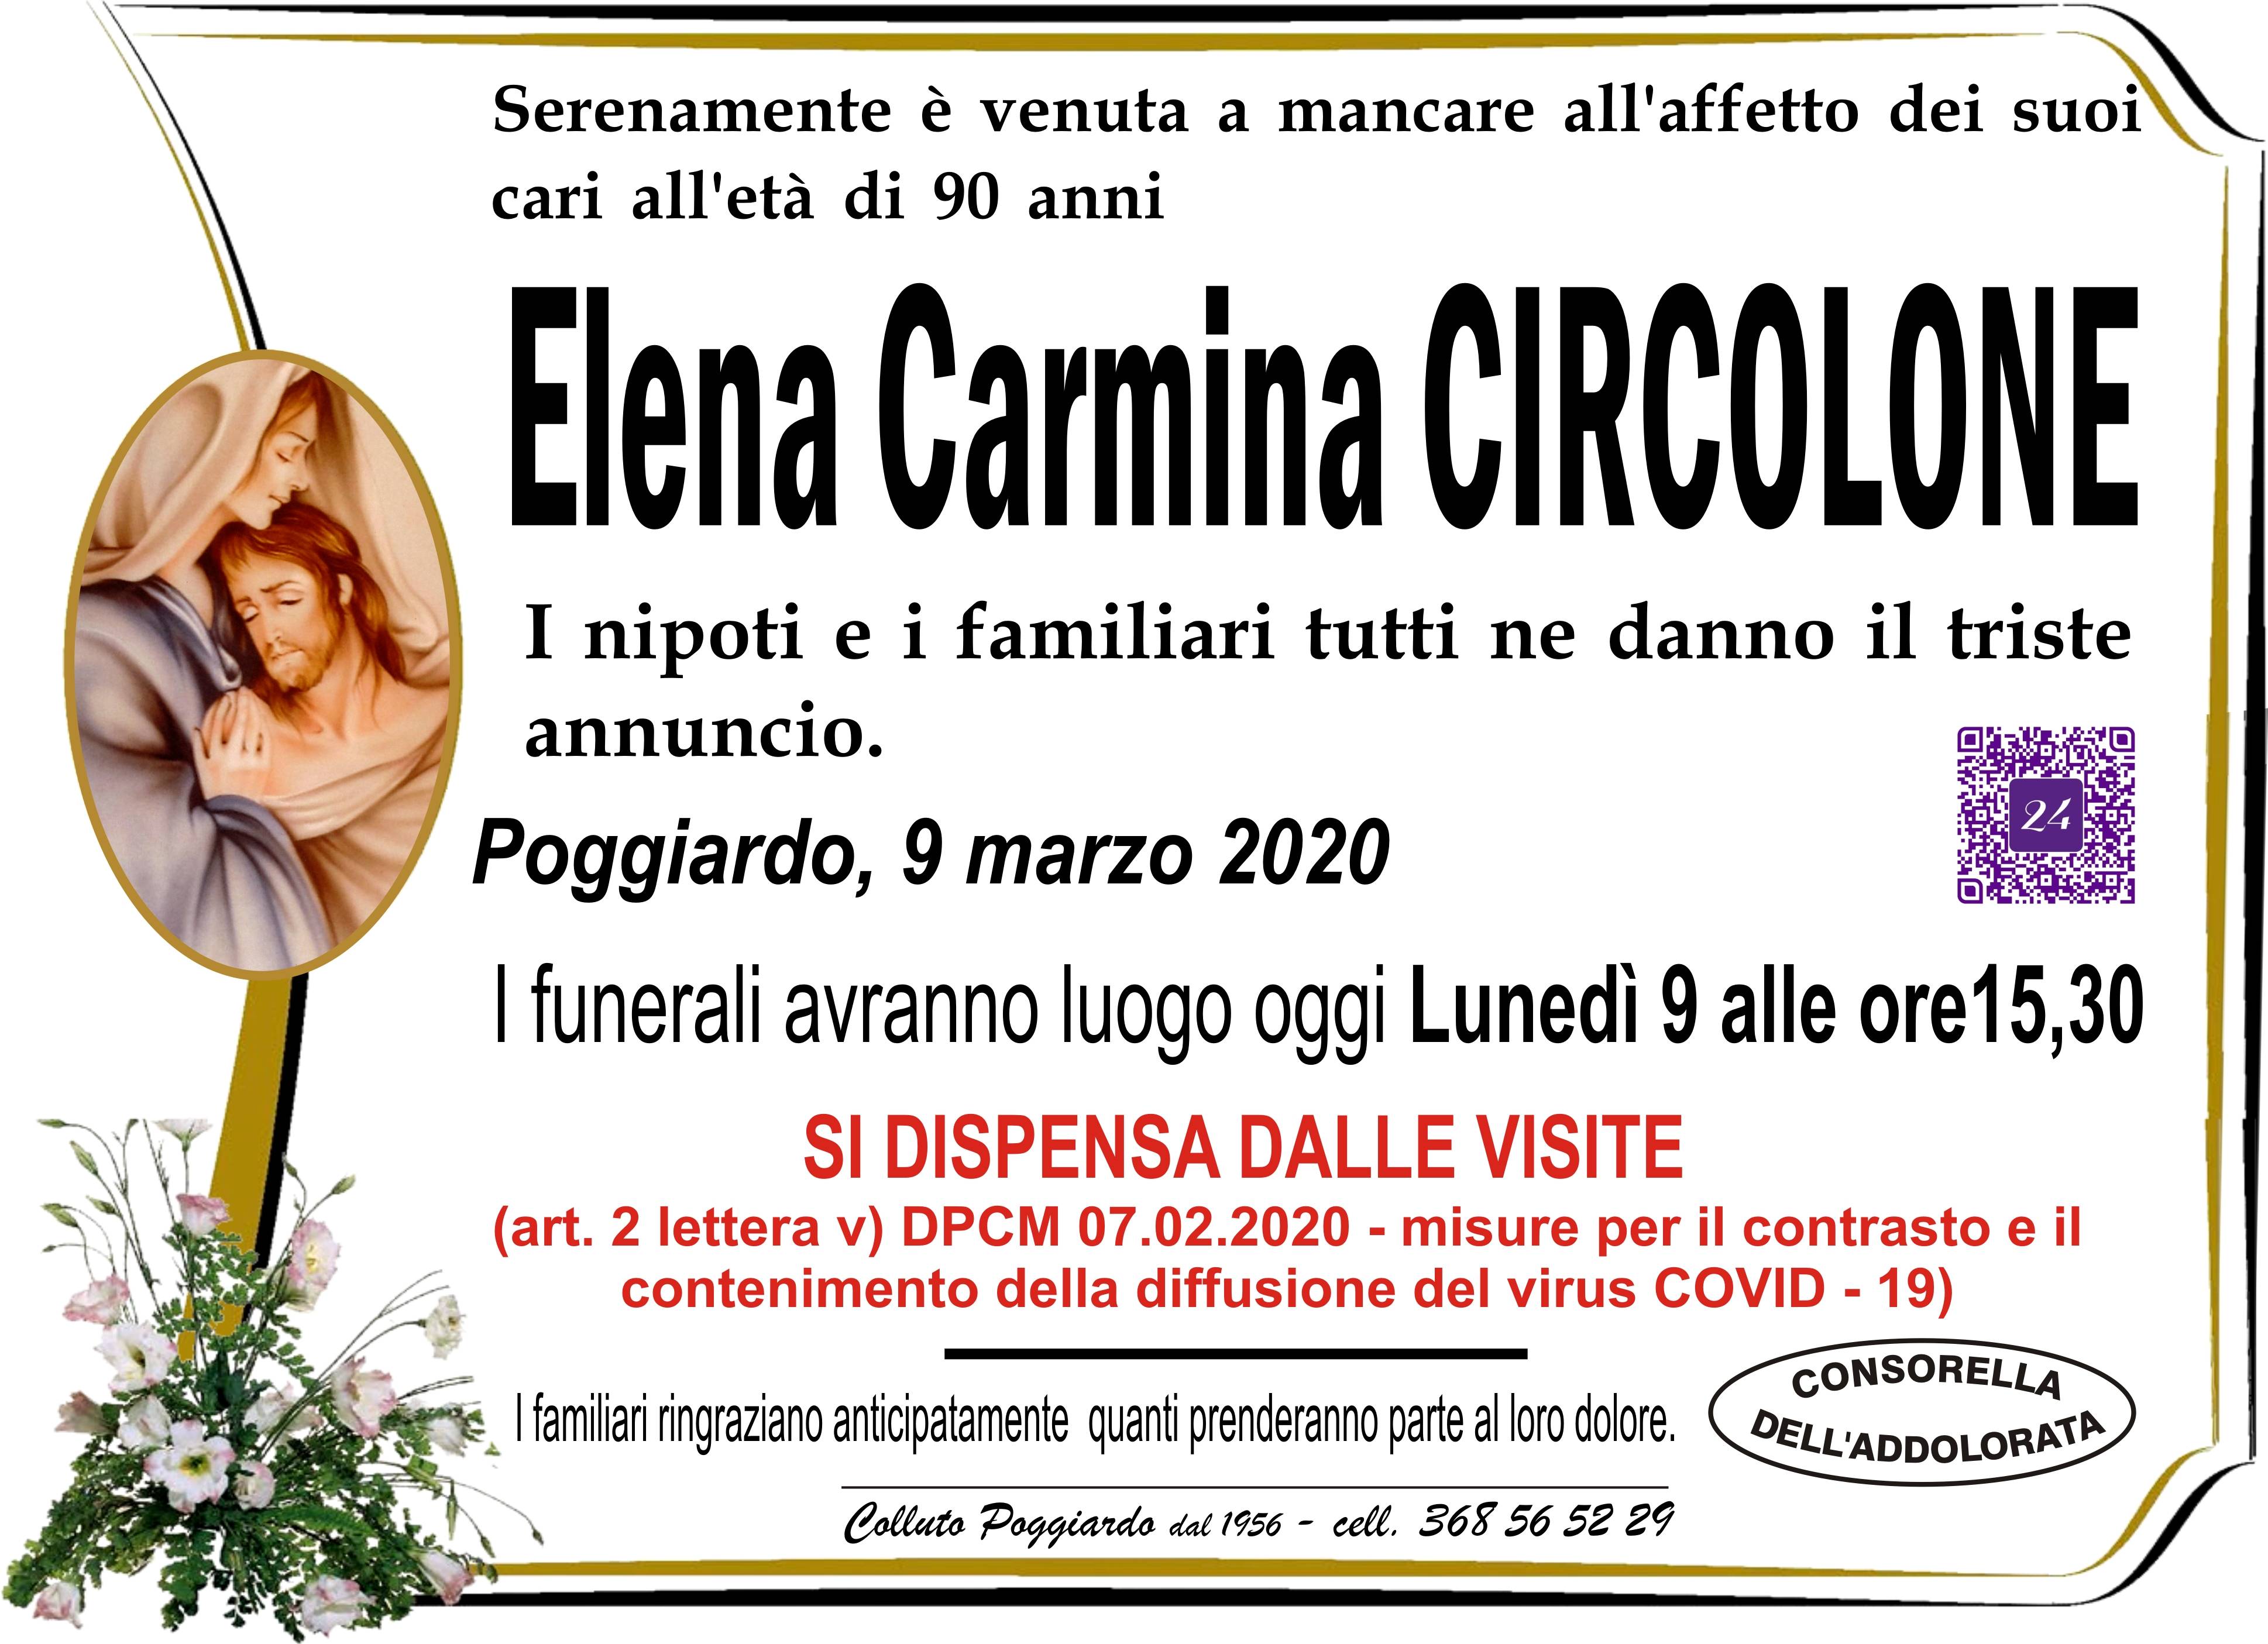 Elena Carmina Circolone